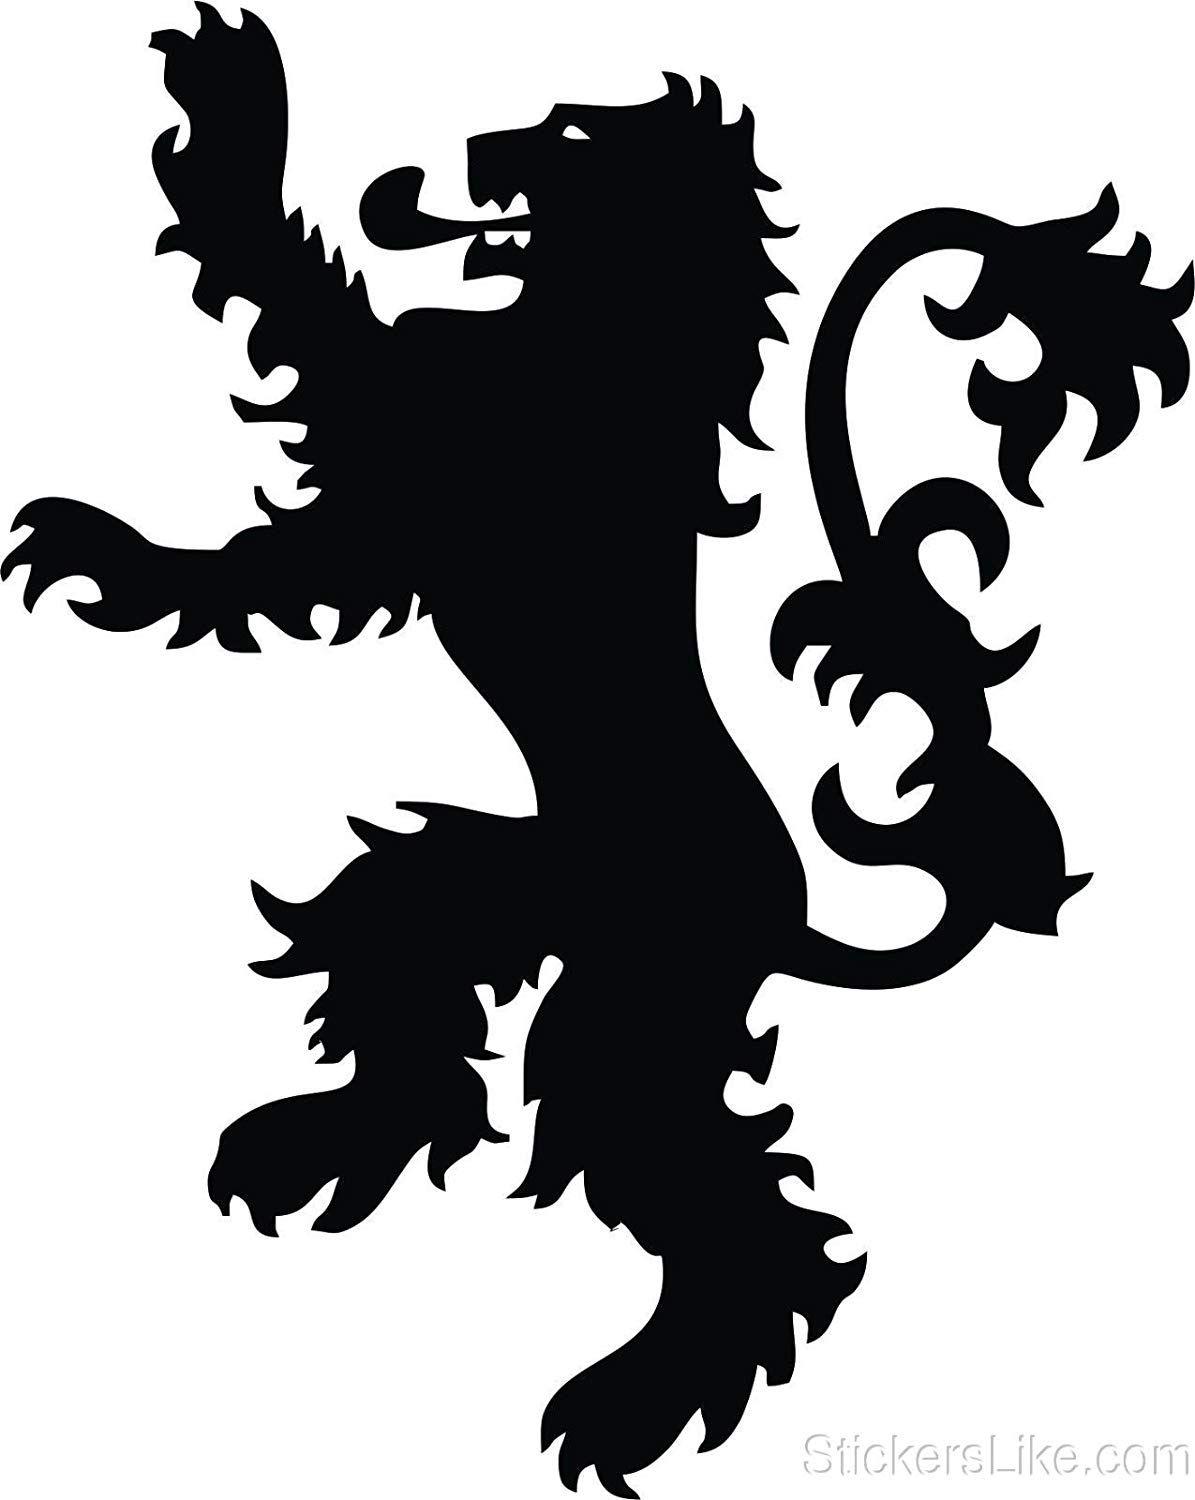 Game of Thrones Black and White Logo - LogoDix